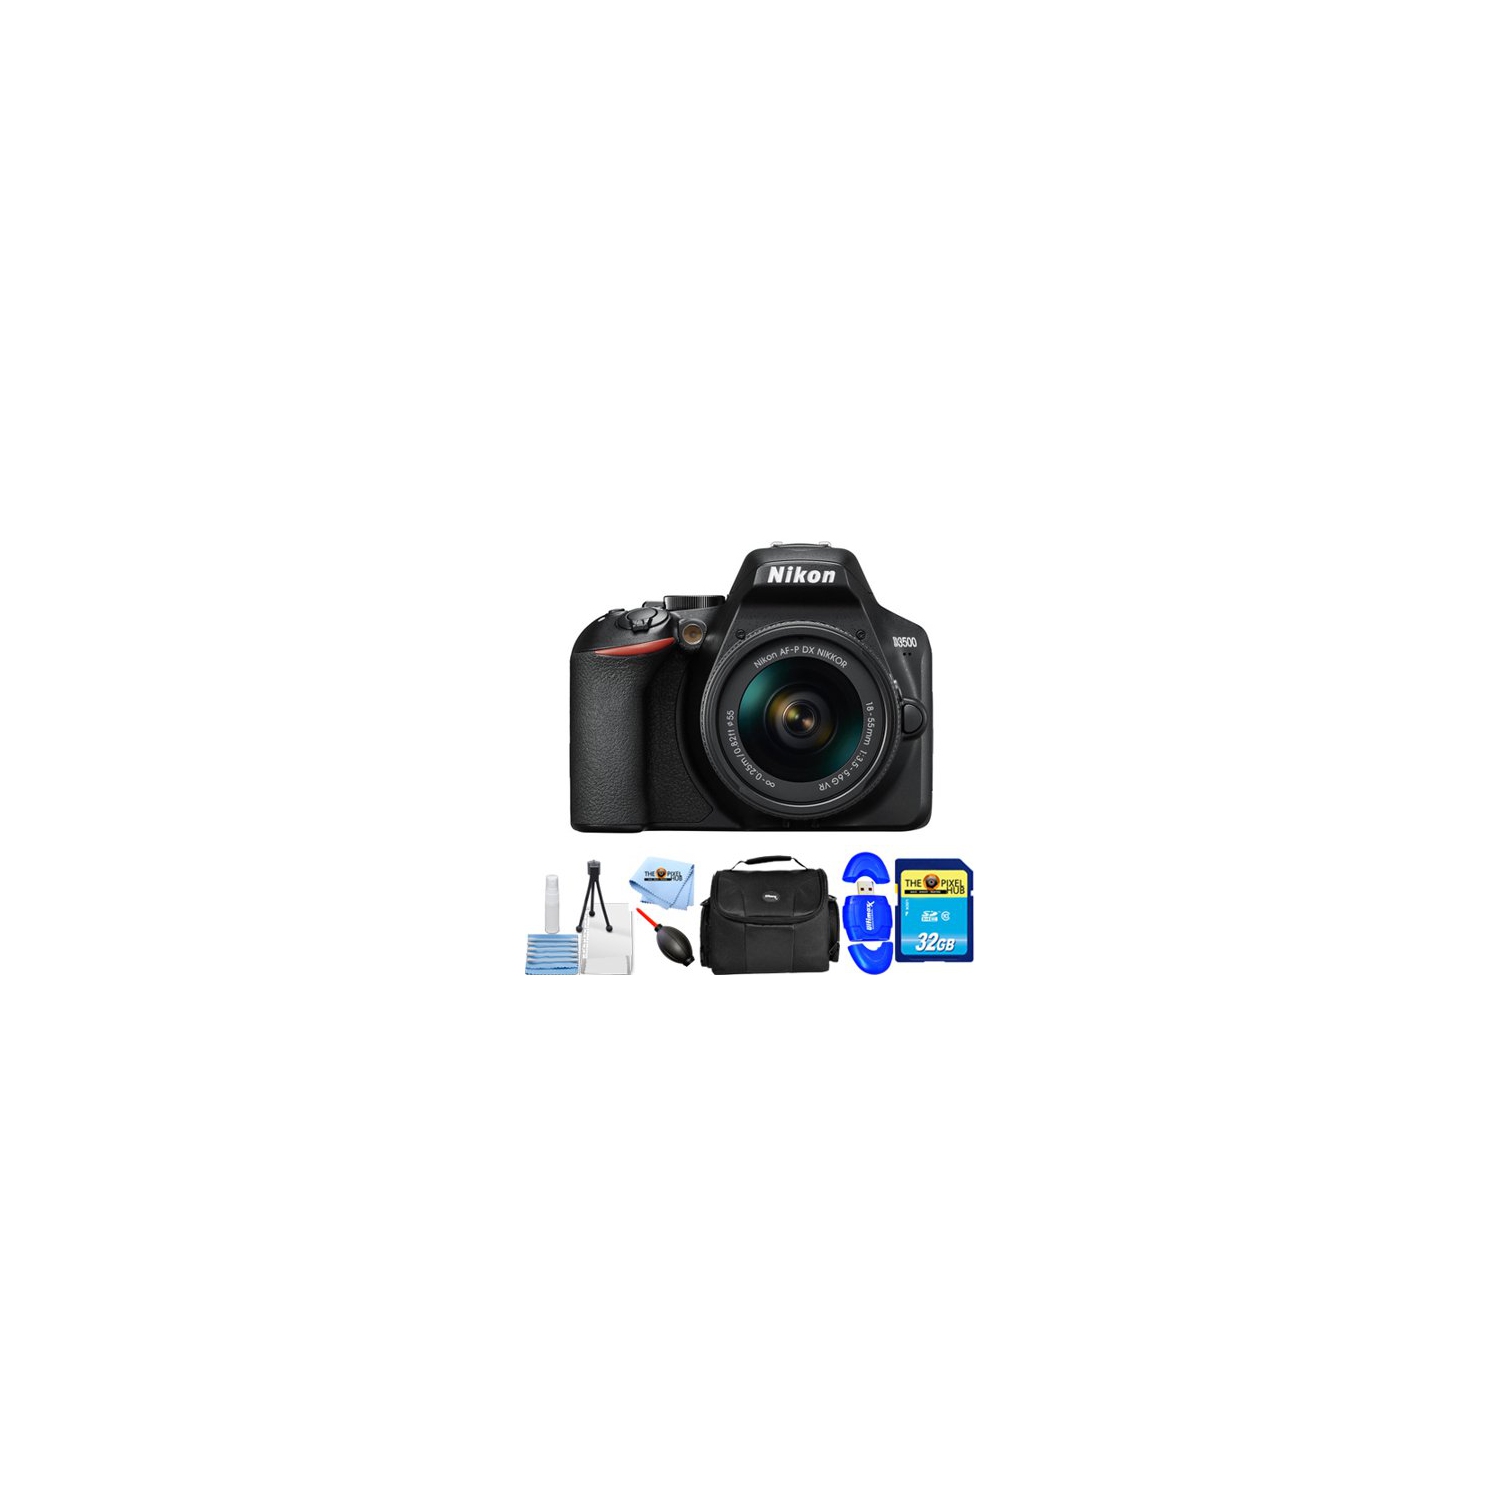 Nikon D3500 DSLR Camera with 18-55mm VR Lens Starter Kit USA Model - US Version w/ Seller Warranty